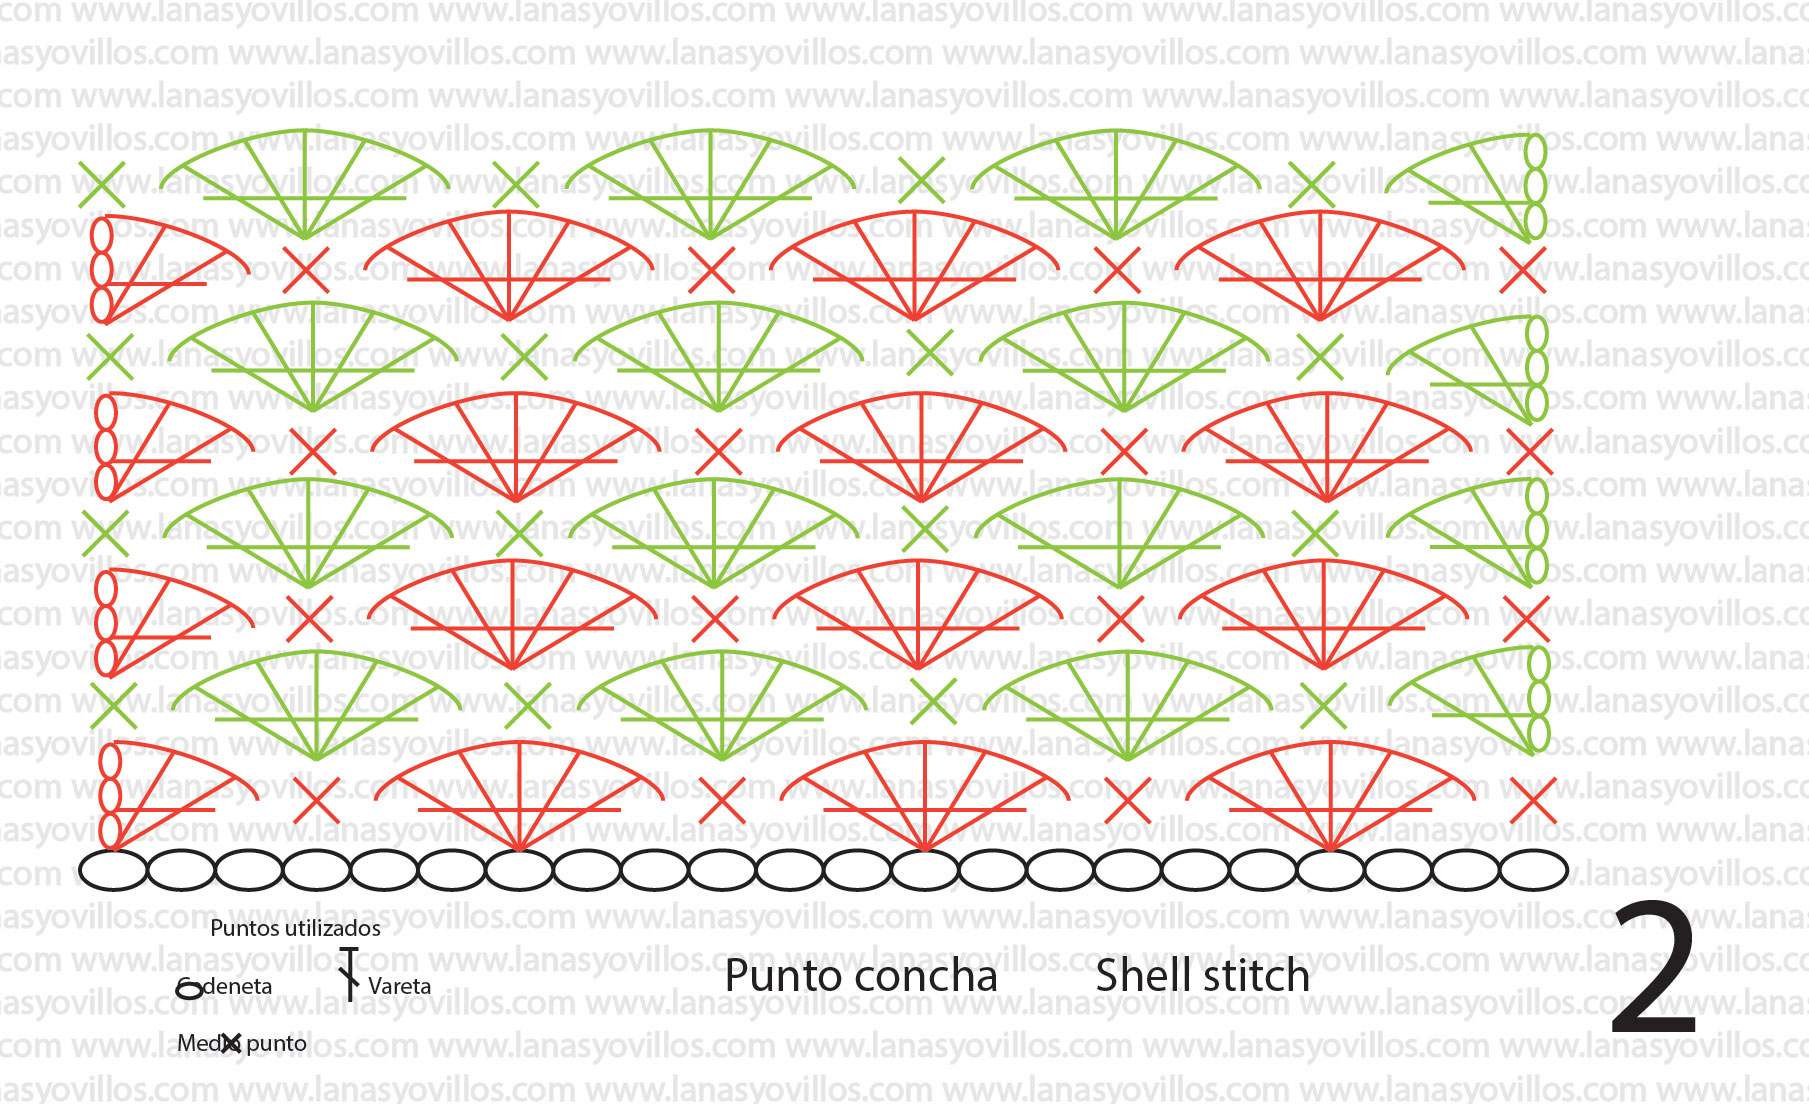 Crochet Shell Stitch Pattern Shell Stitch Punto Concha Crochet Esquema Lanas Y Ovillos